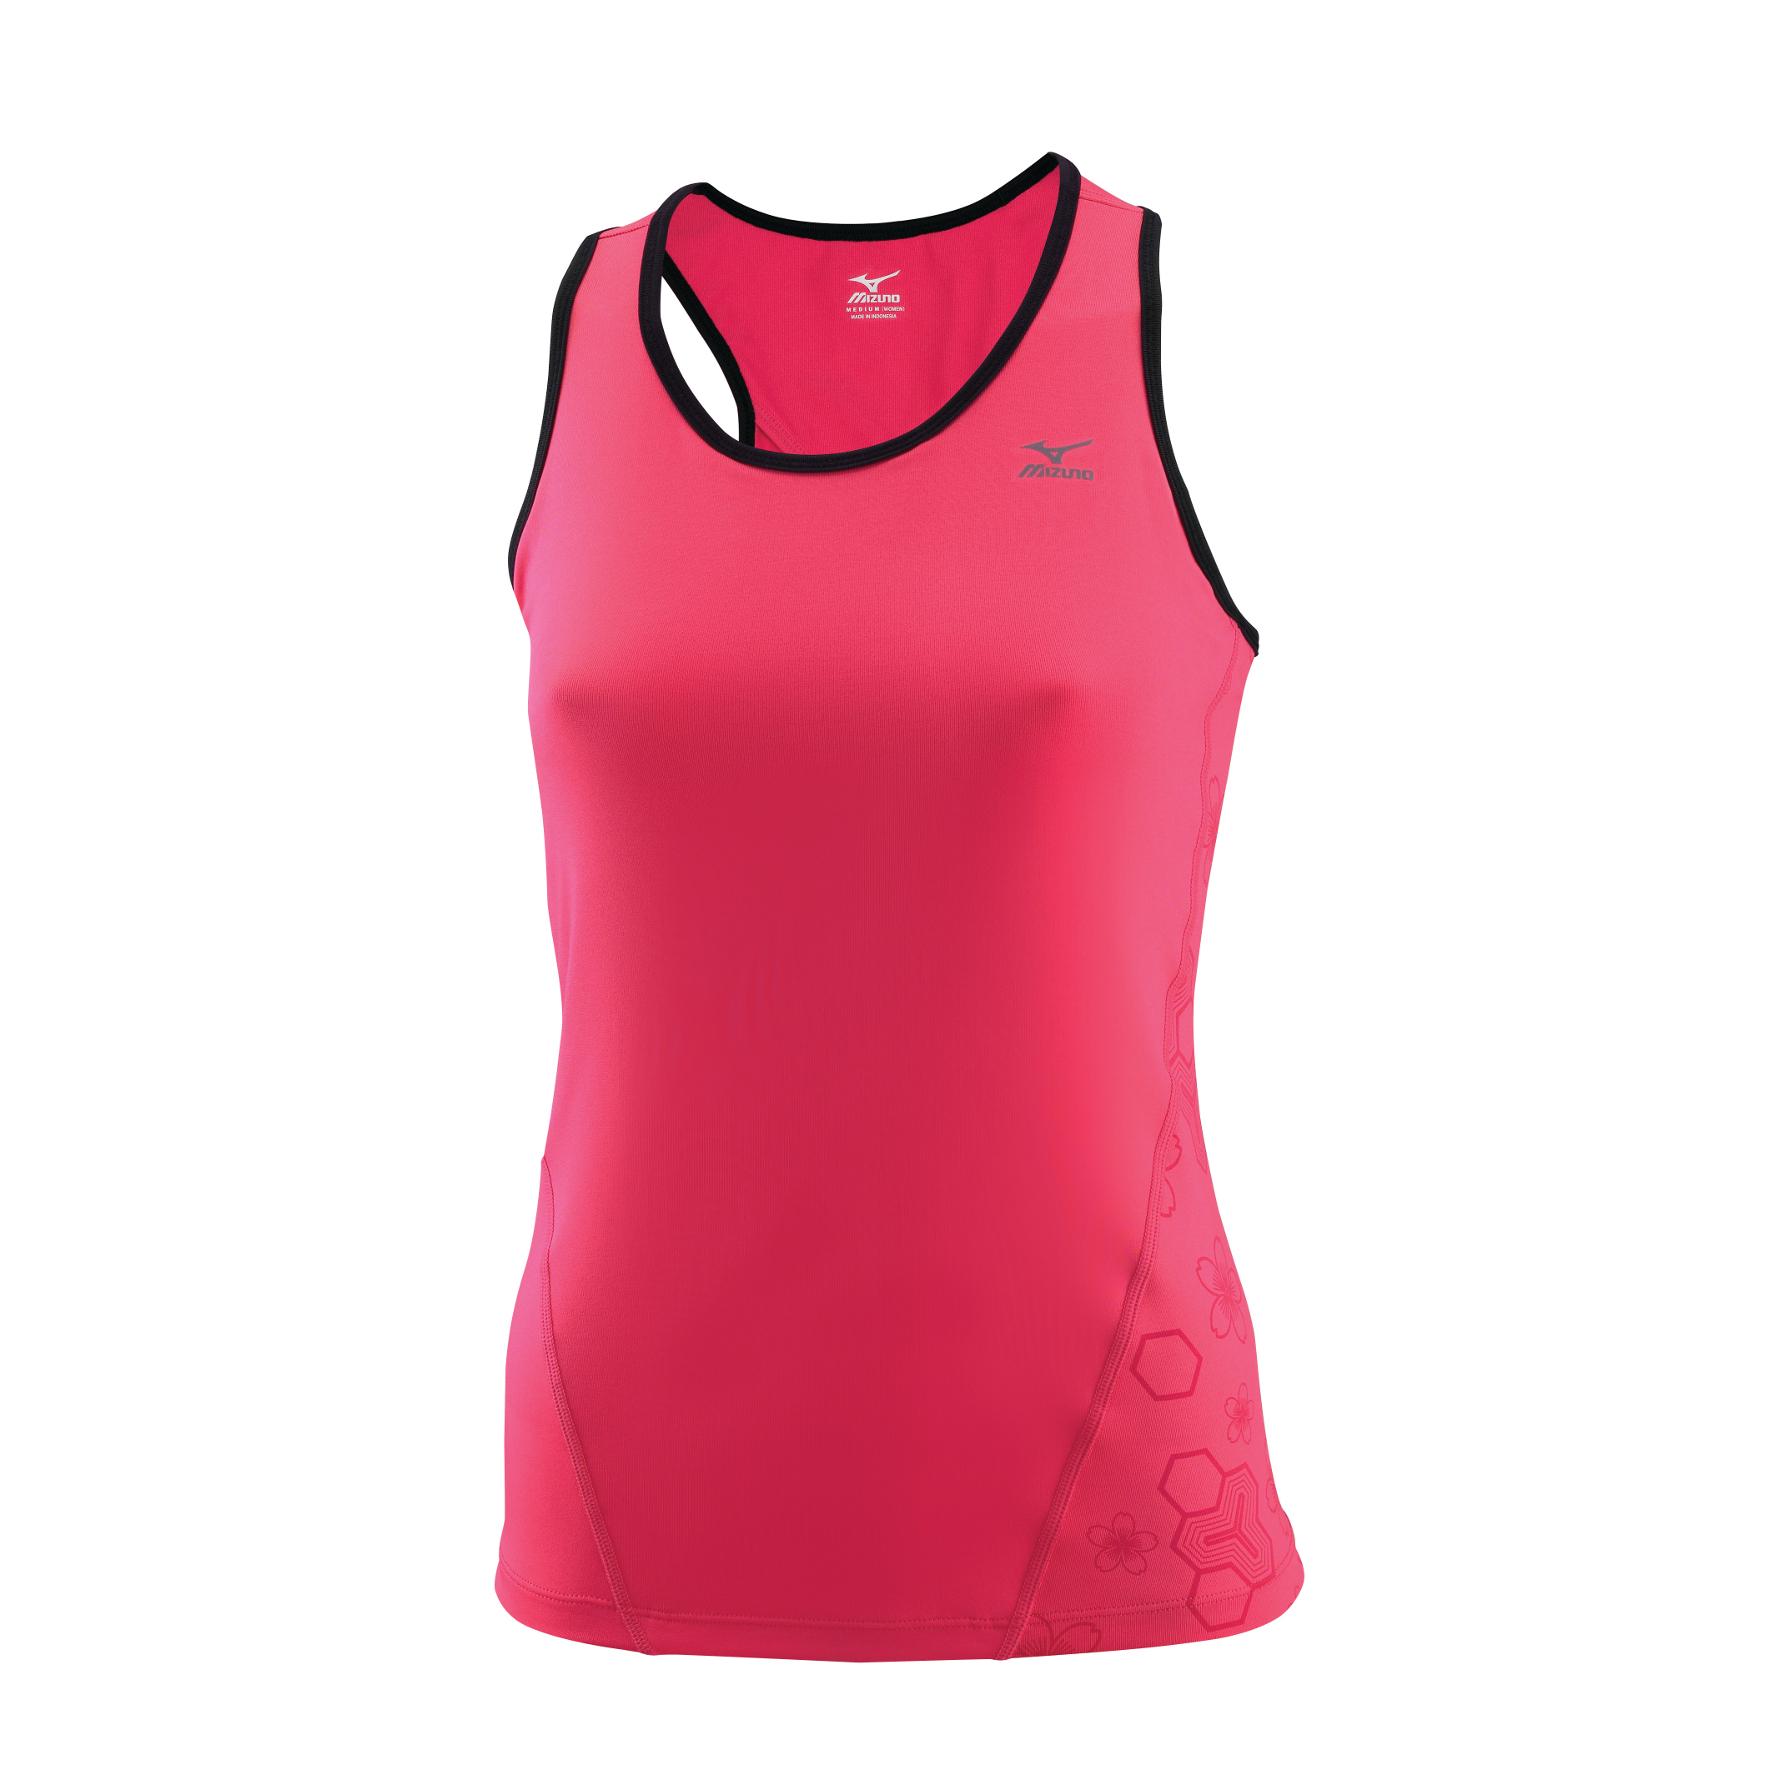 Foto Camiseta para correr Mizuno 77RB321 DryLite rosa/negro para muje, m foto 584610